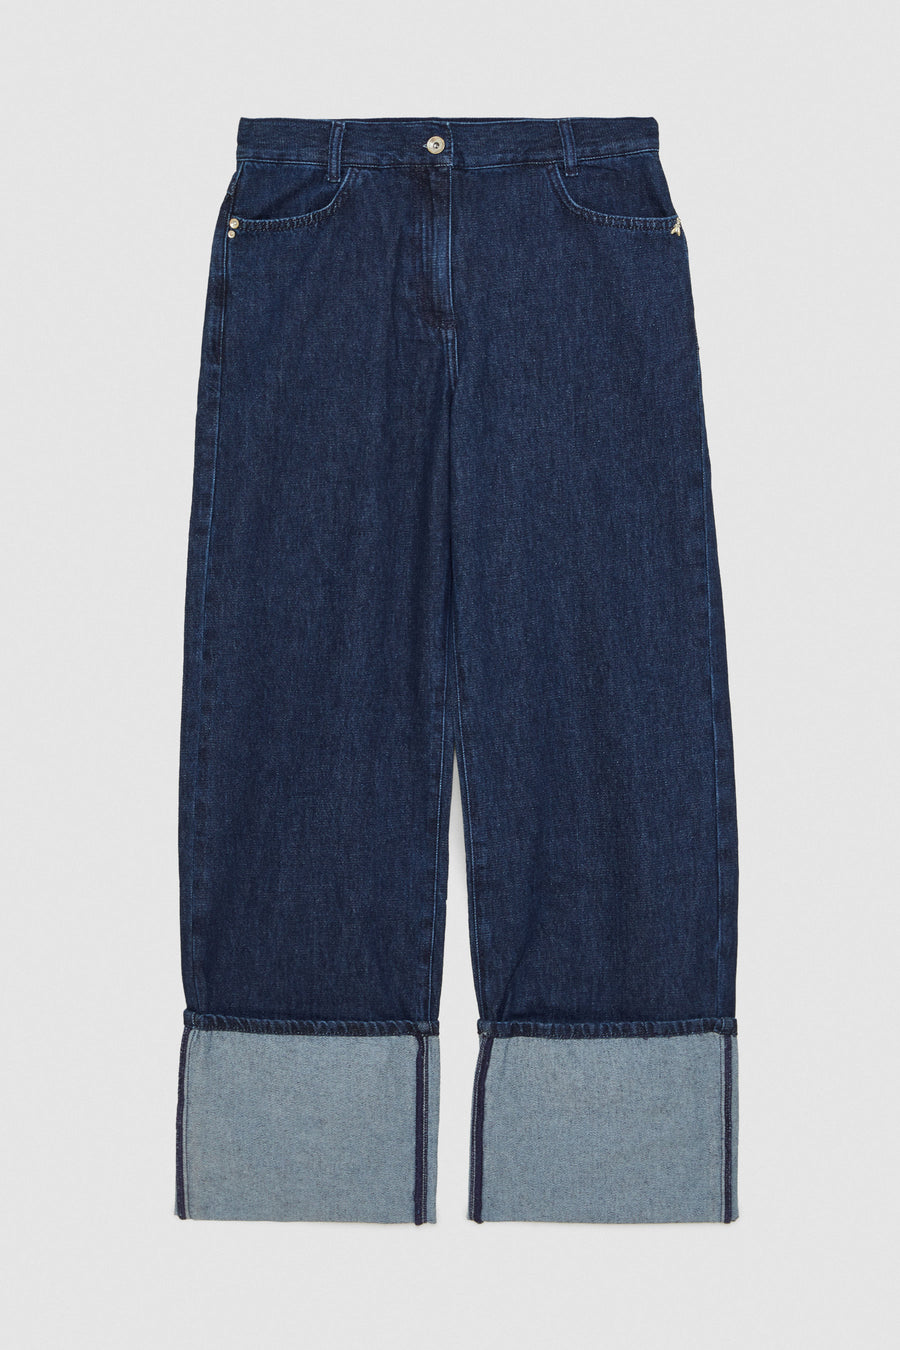 W3-2P1503 Pantalone Denim Authentic Blue Wash